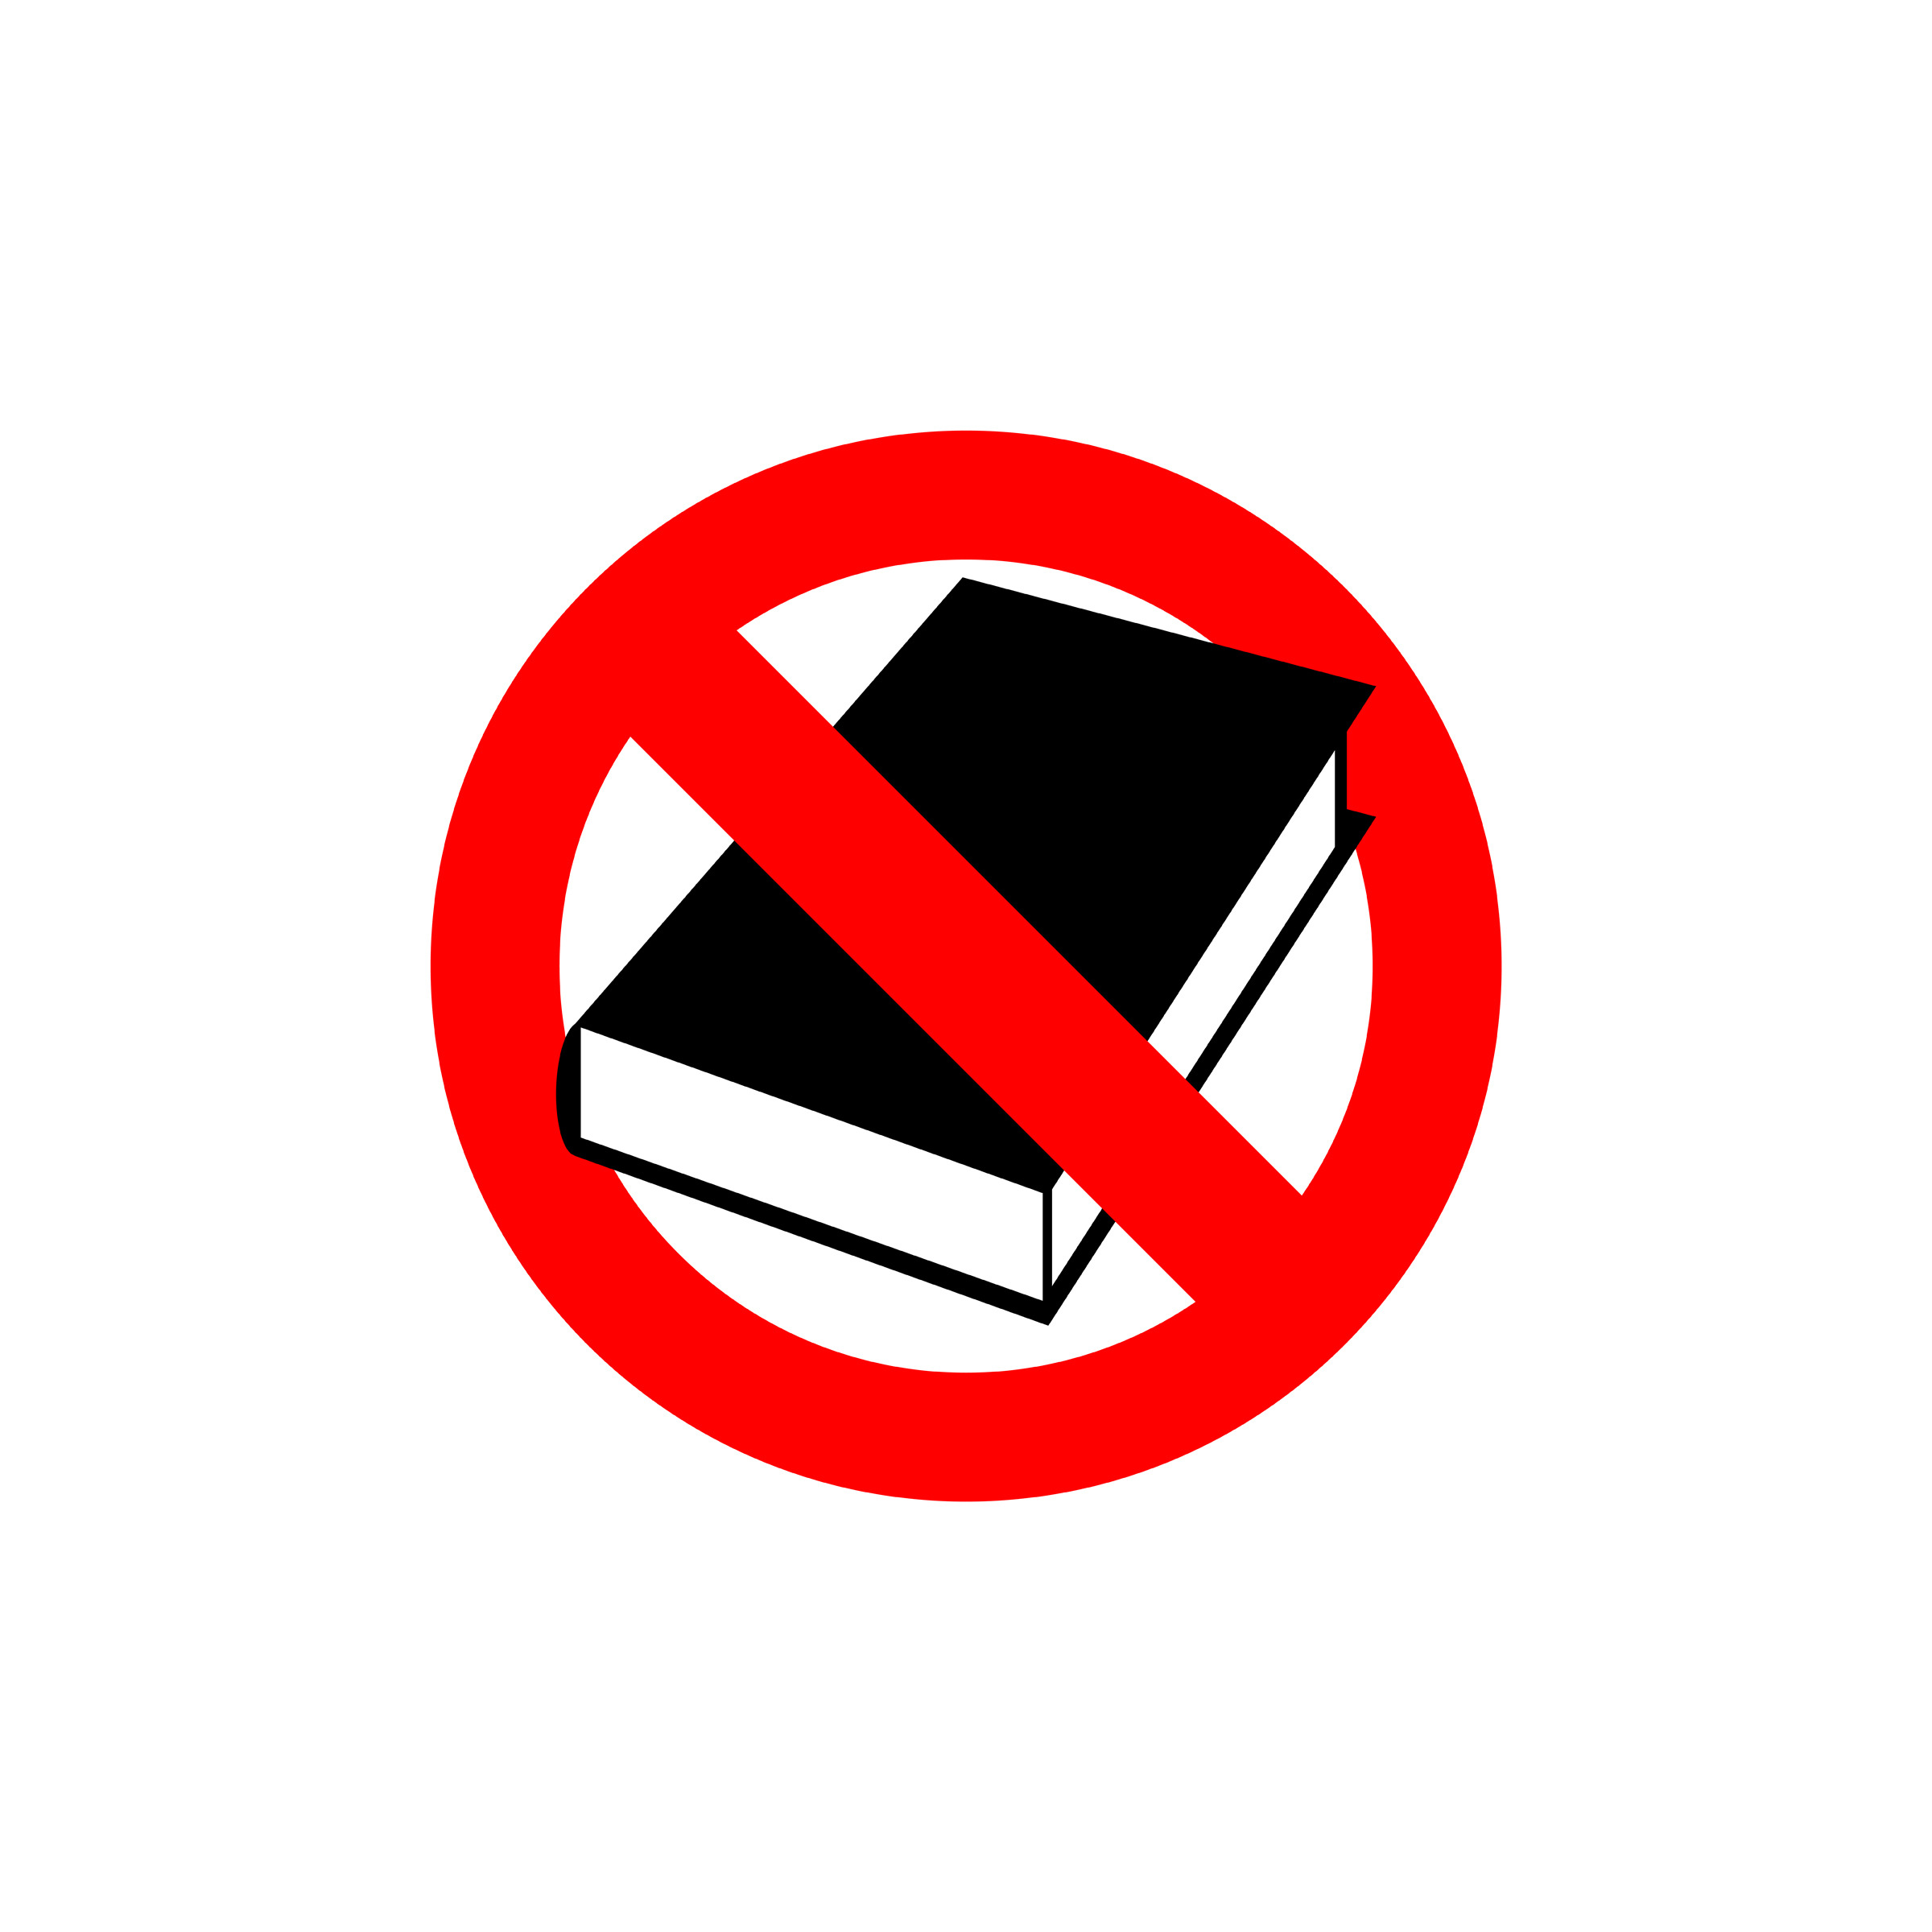 Книга без запрета. Перечеркнутая книга. Знак перечеркнутая книжка. Запрещенные книги. Запрет нельзя.